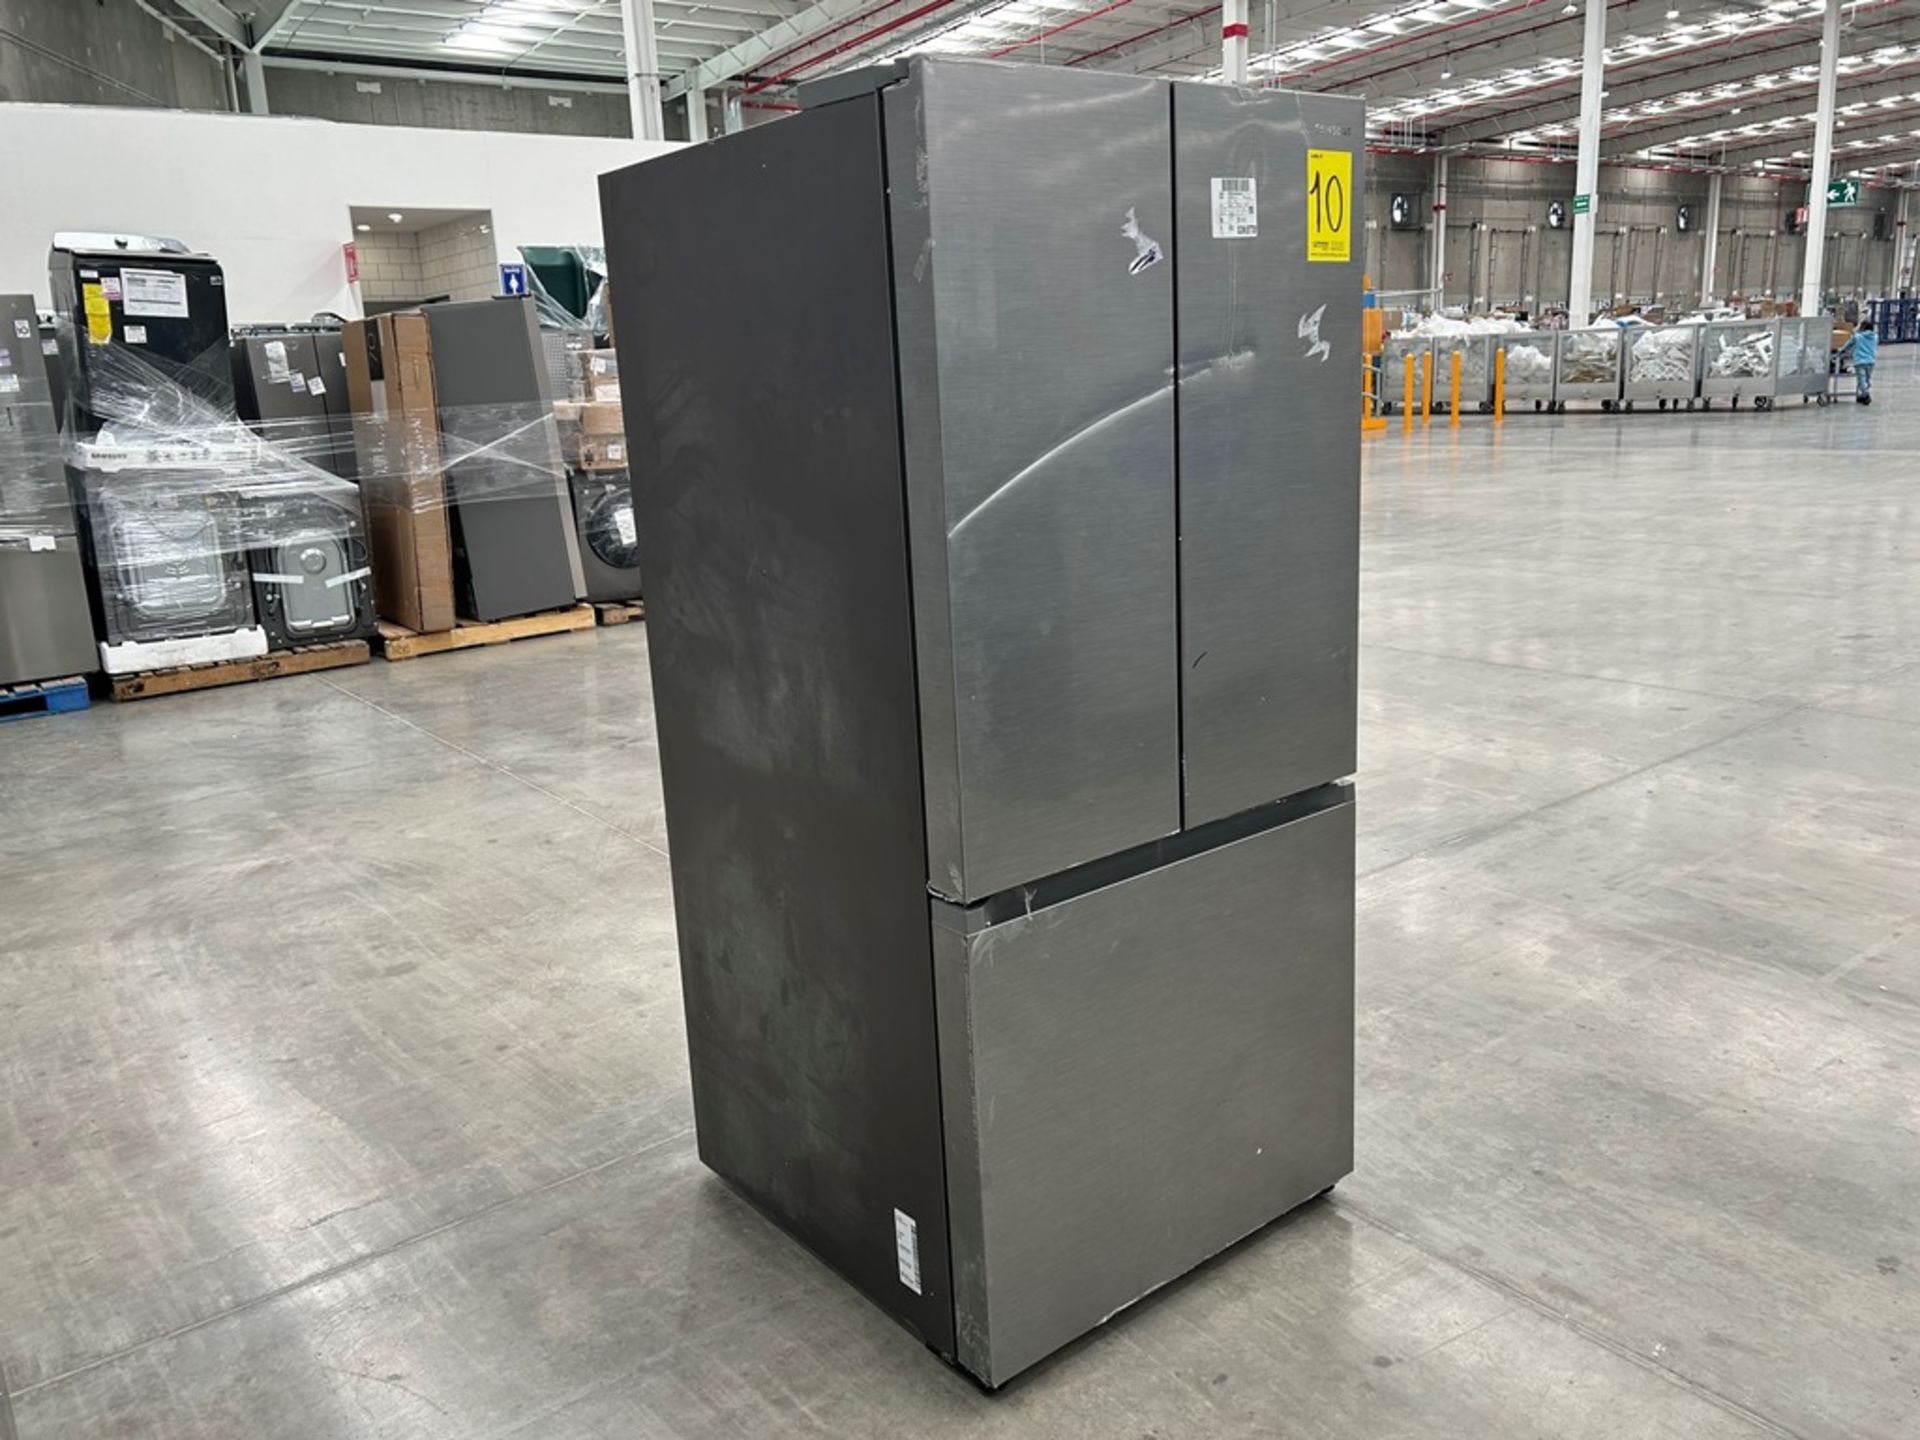 1 refrigerador Marca SAMSUNG, Modelo RF25C5151S9, Serie 0089E, Color GRIS (No se asegura su funcion - Image 3 of 5